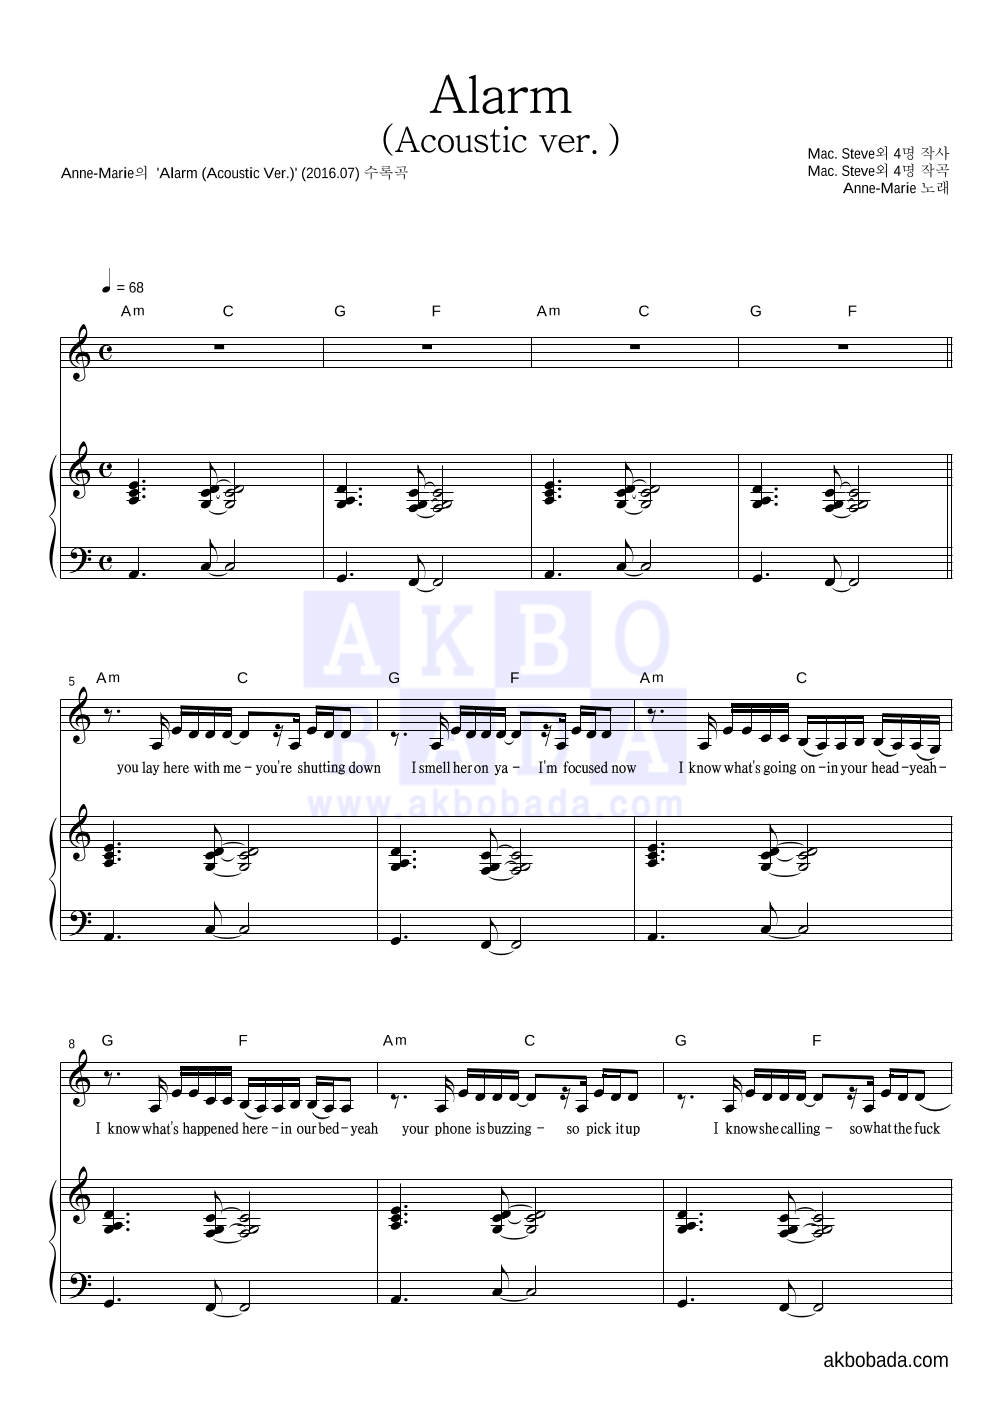 Anne-Marie - Alarm (Acoustic ver.) 피아노 3단 악보 